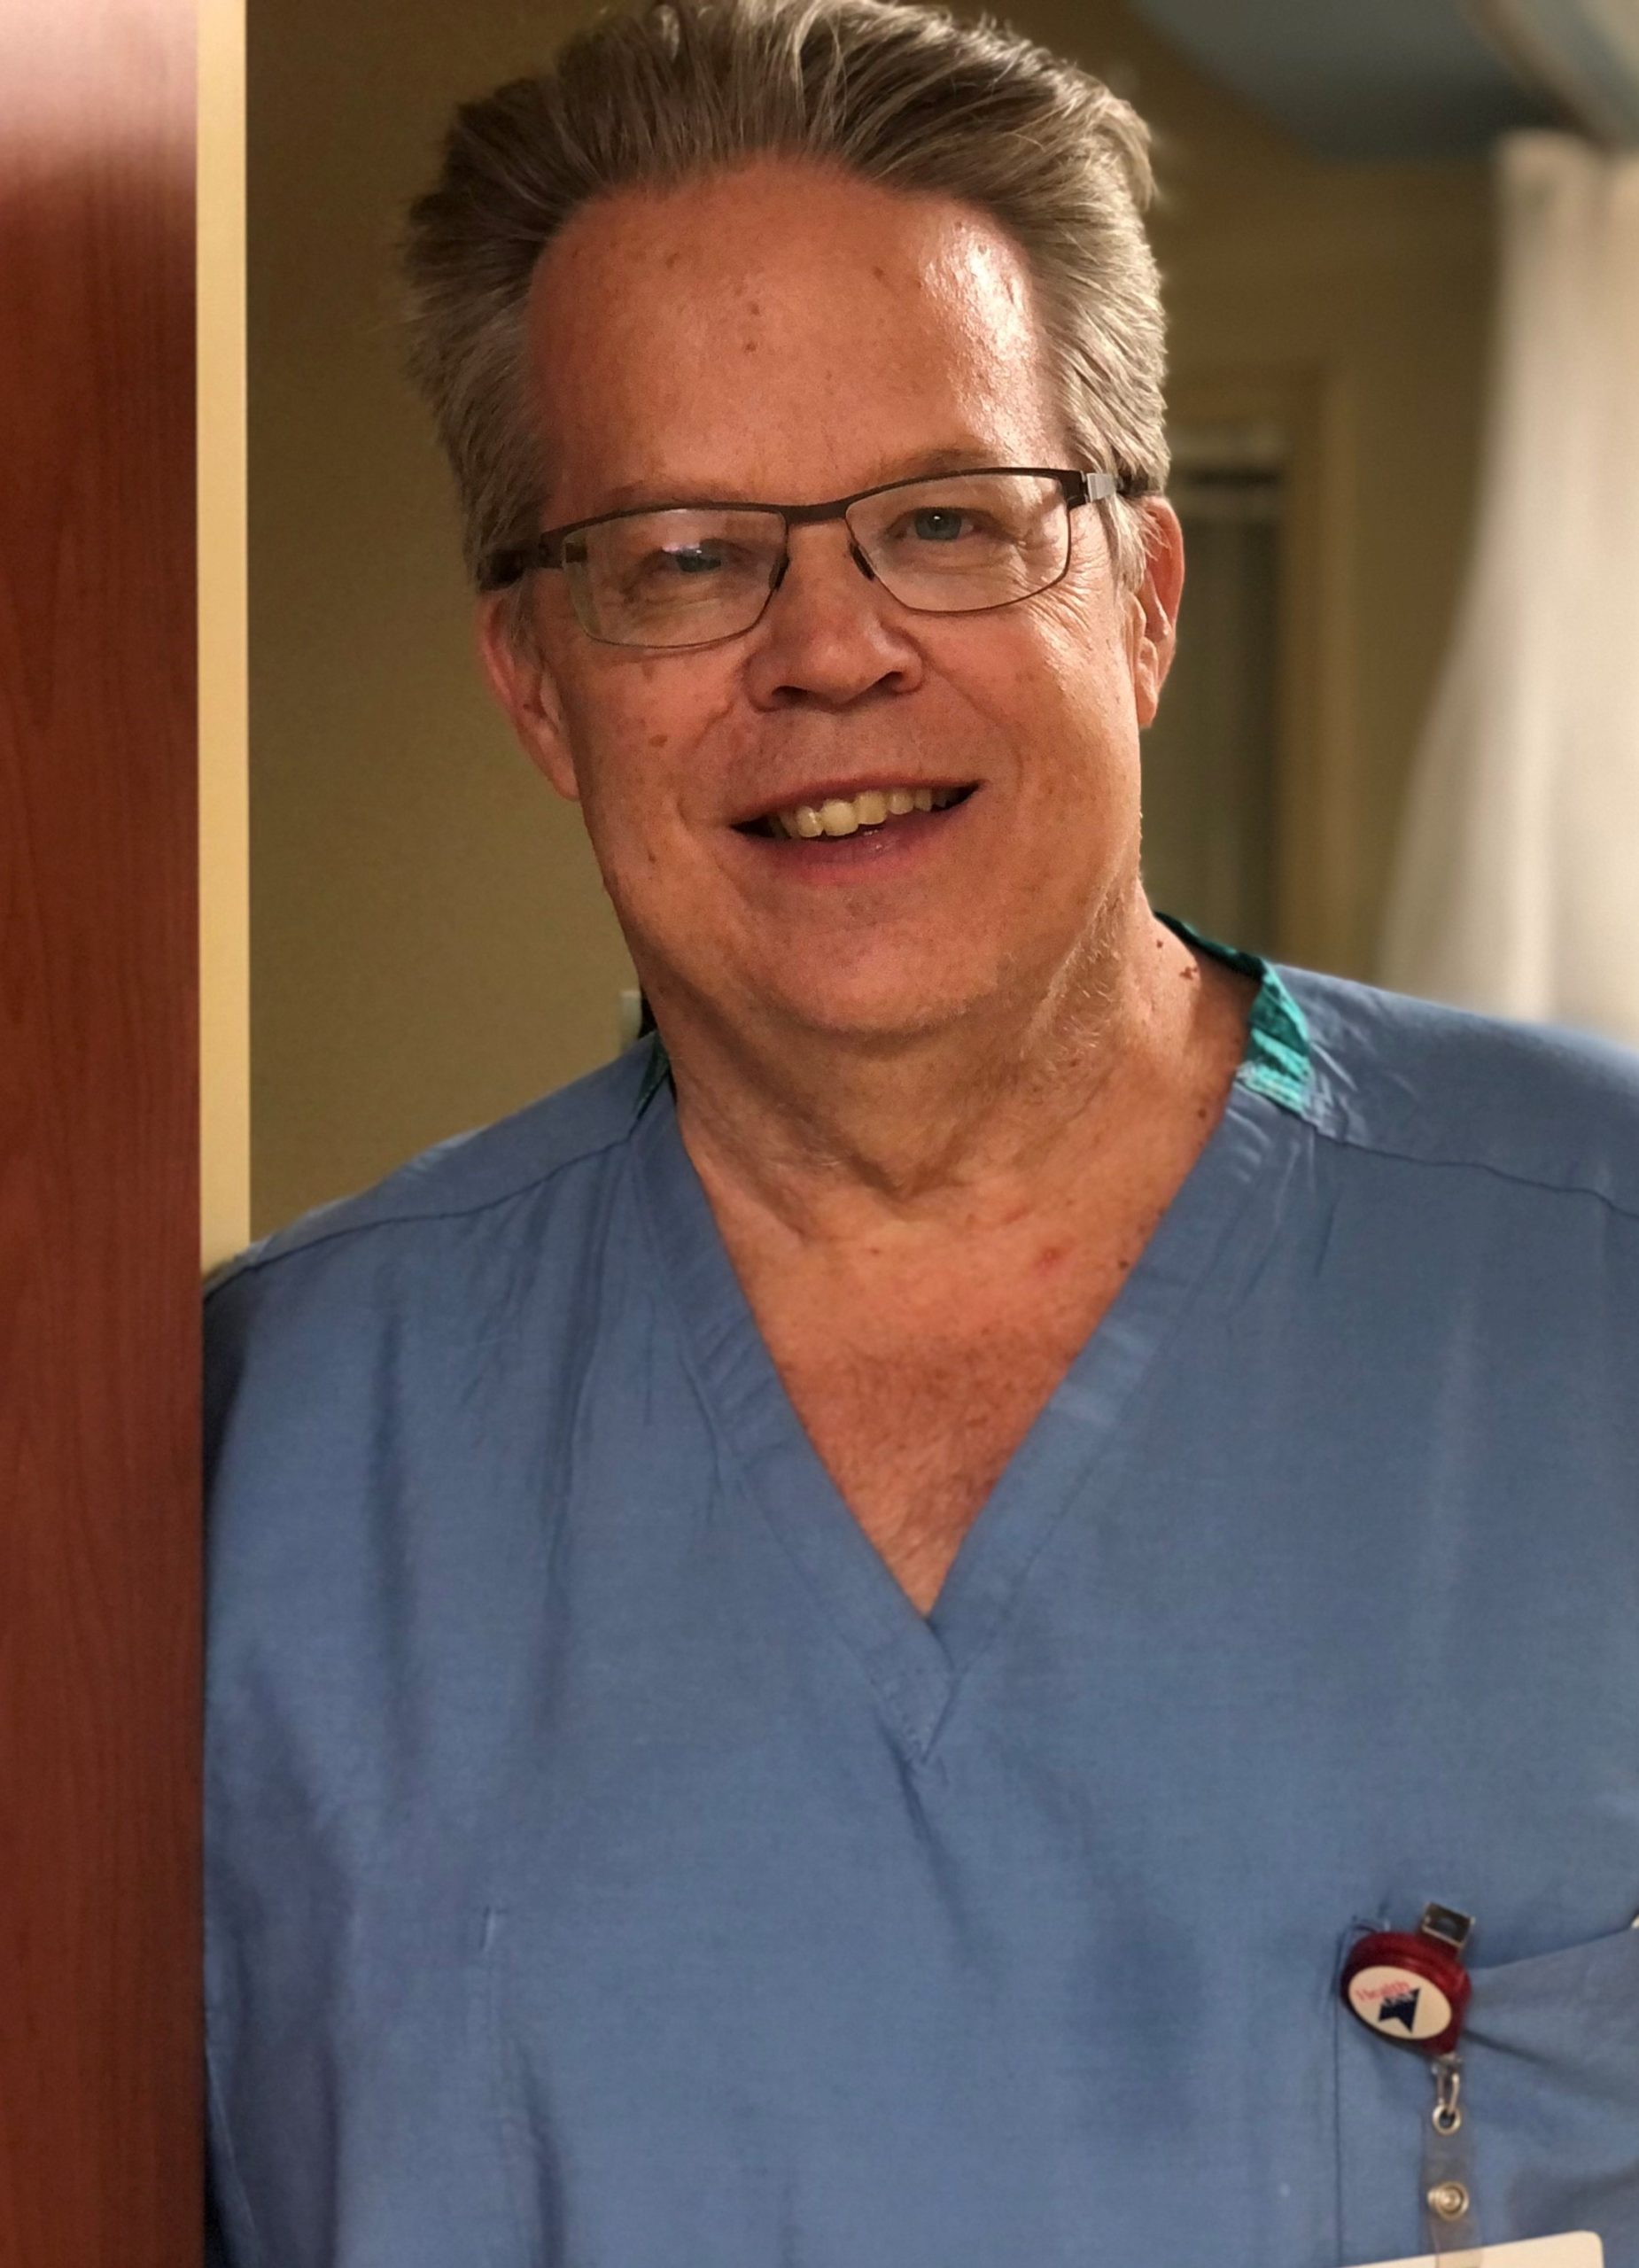 Man wearing glasses and blue scrubs. Headshot of Dr. Thomas Heffron.